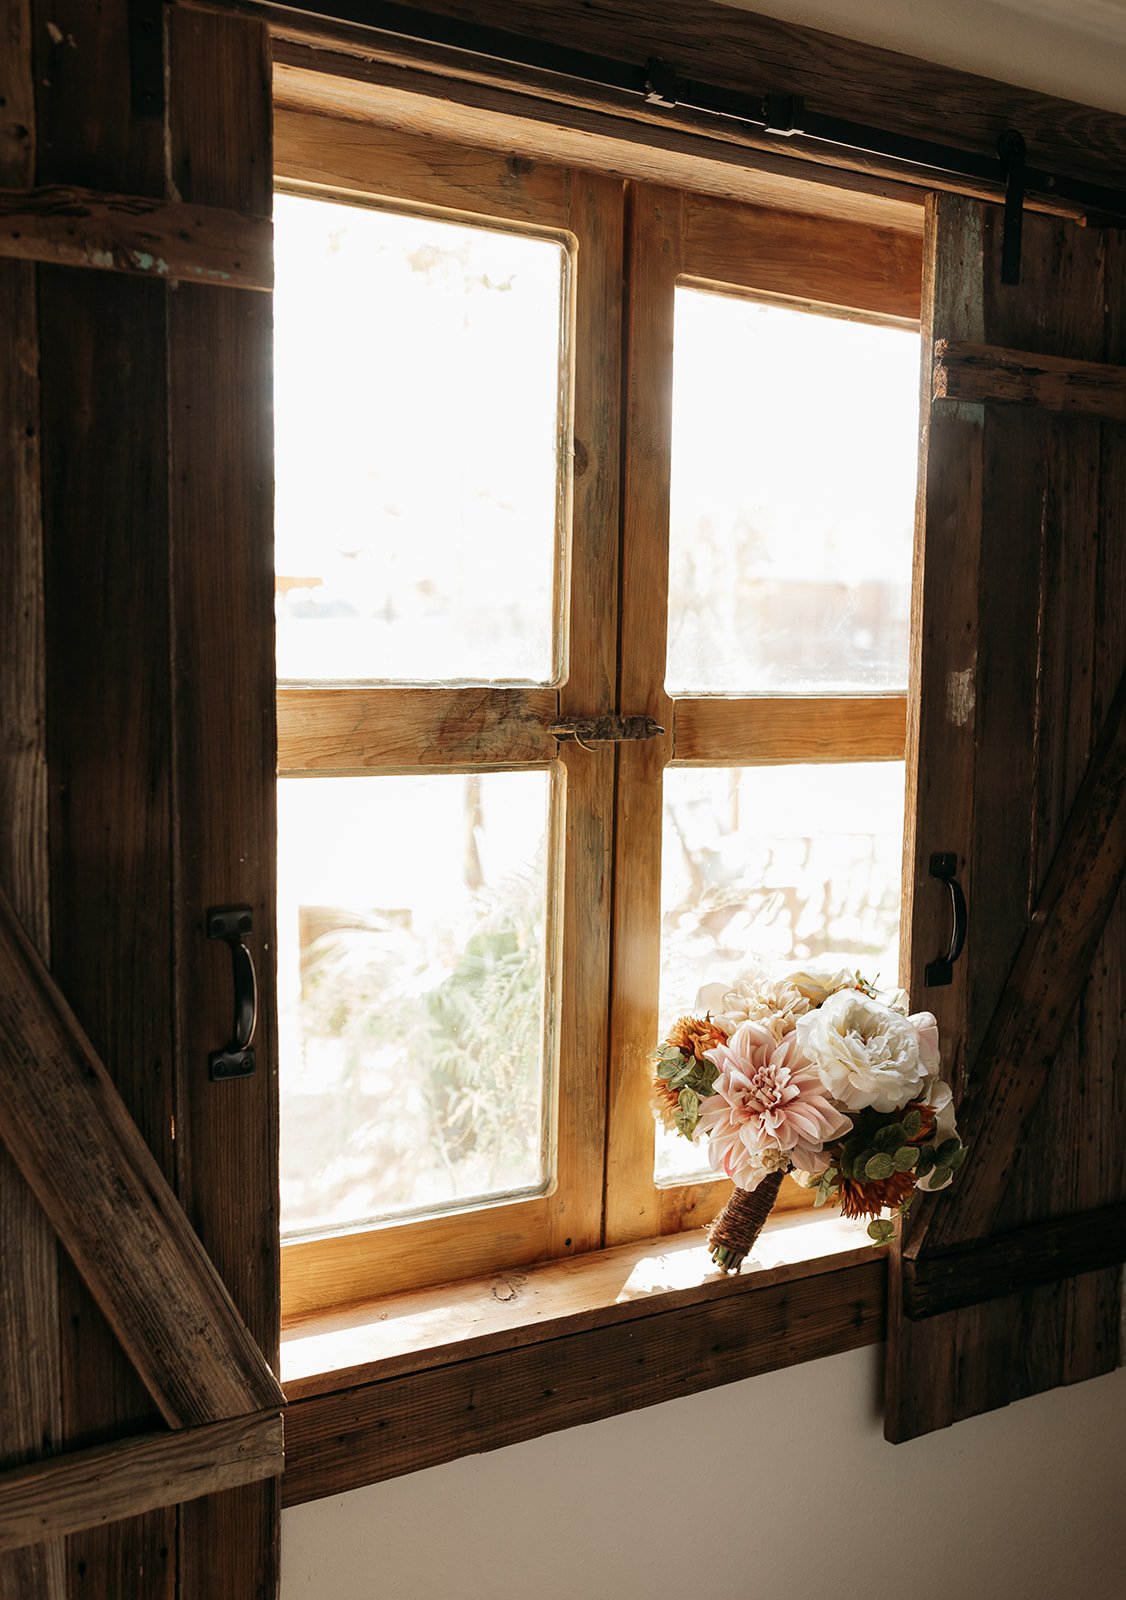 Timeless wooden shutters frame the light-filled windows